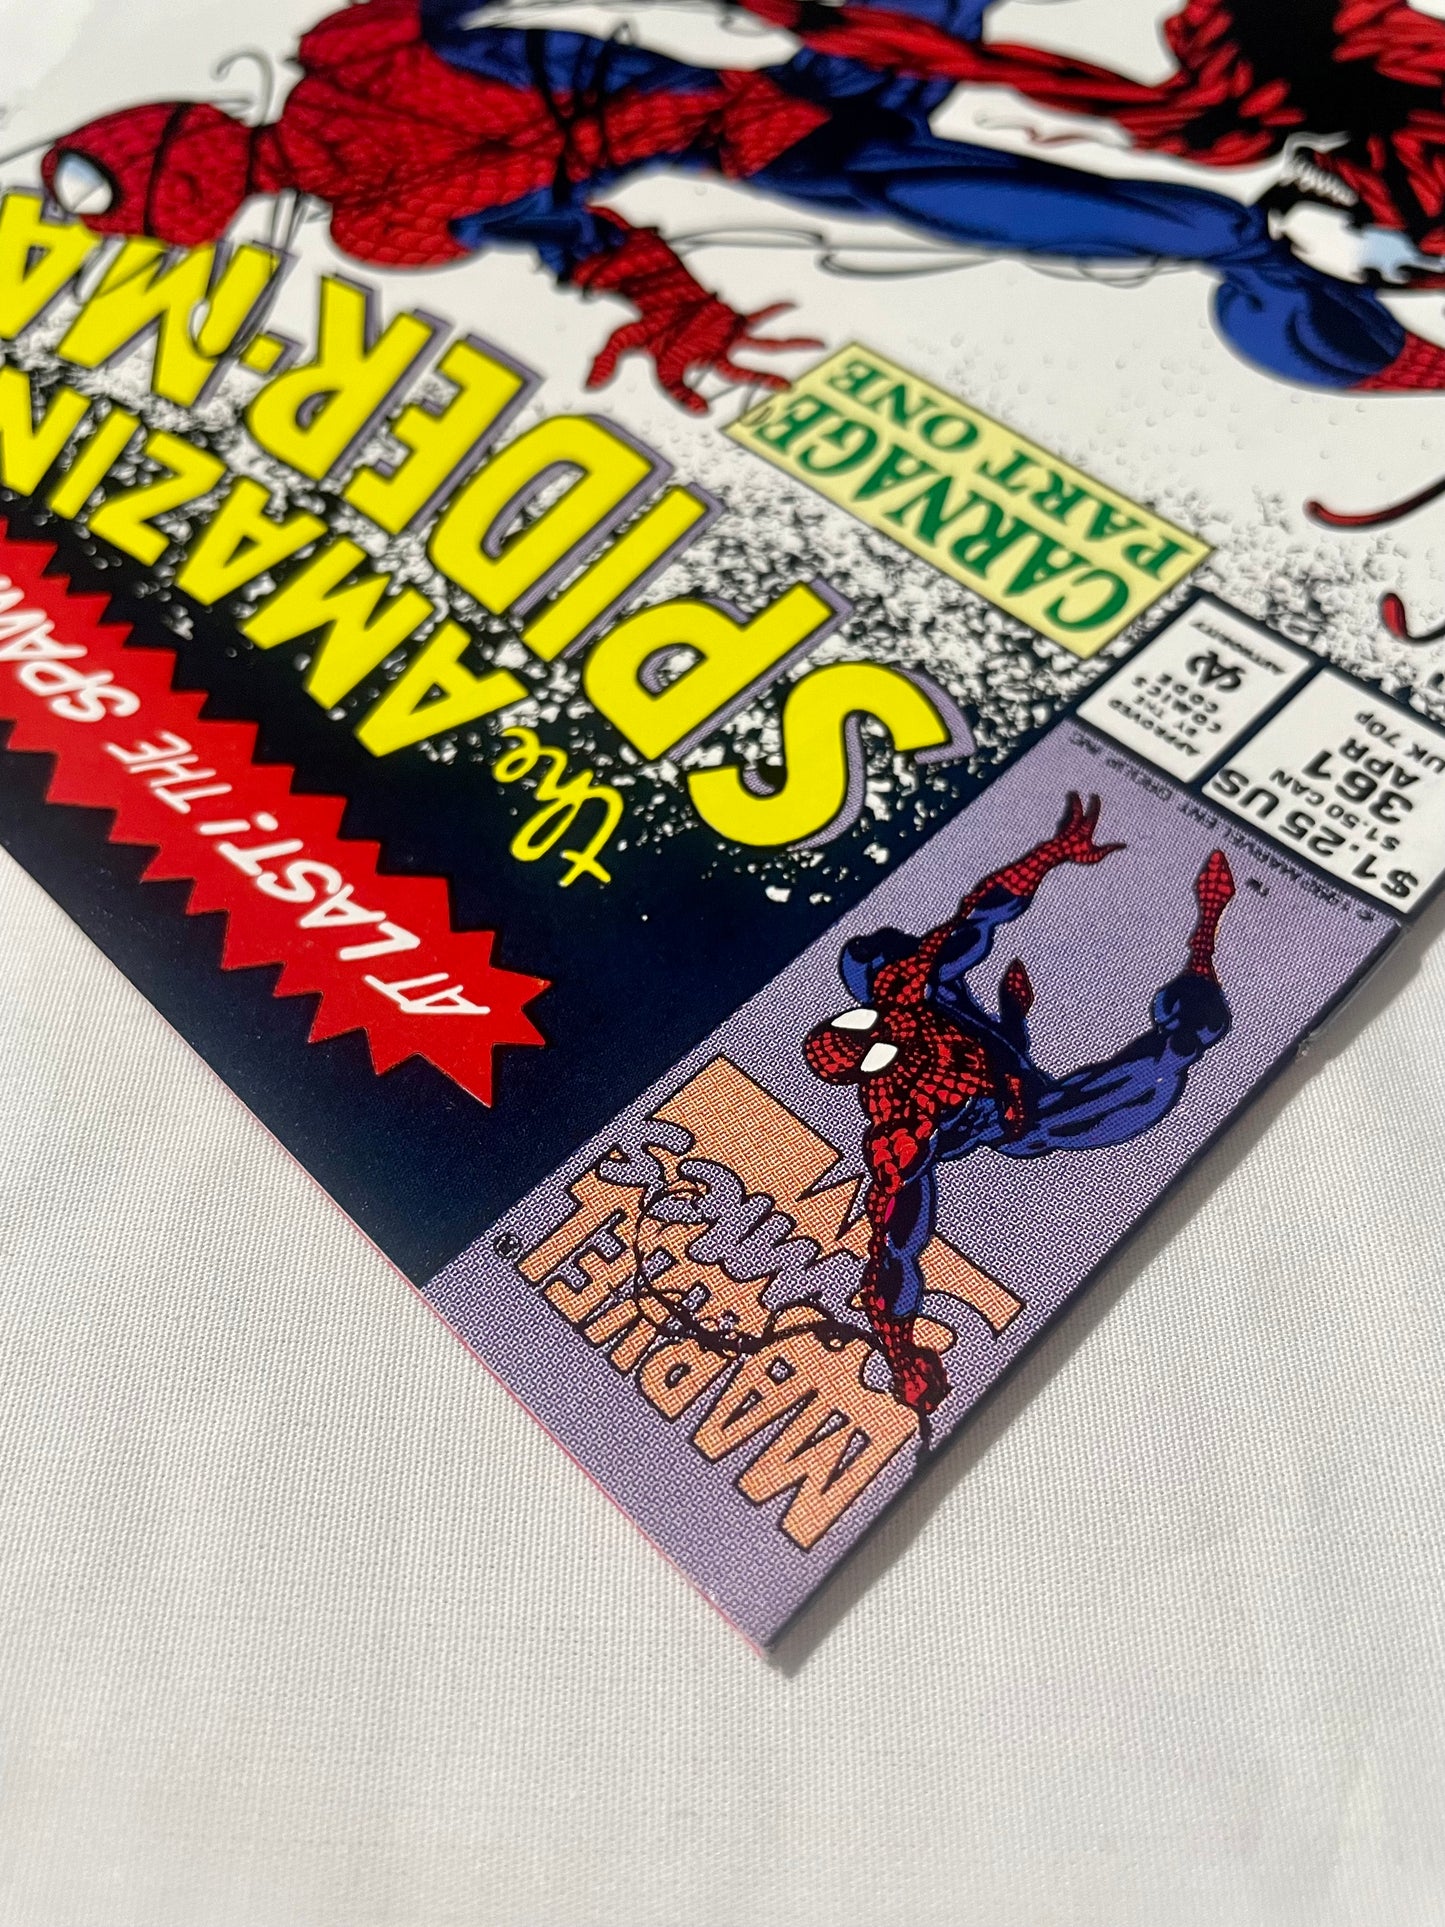 Marvel Comics: The Amazing Spider-Man #361